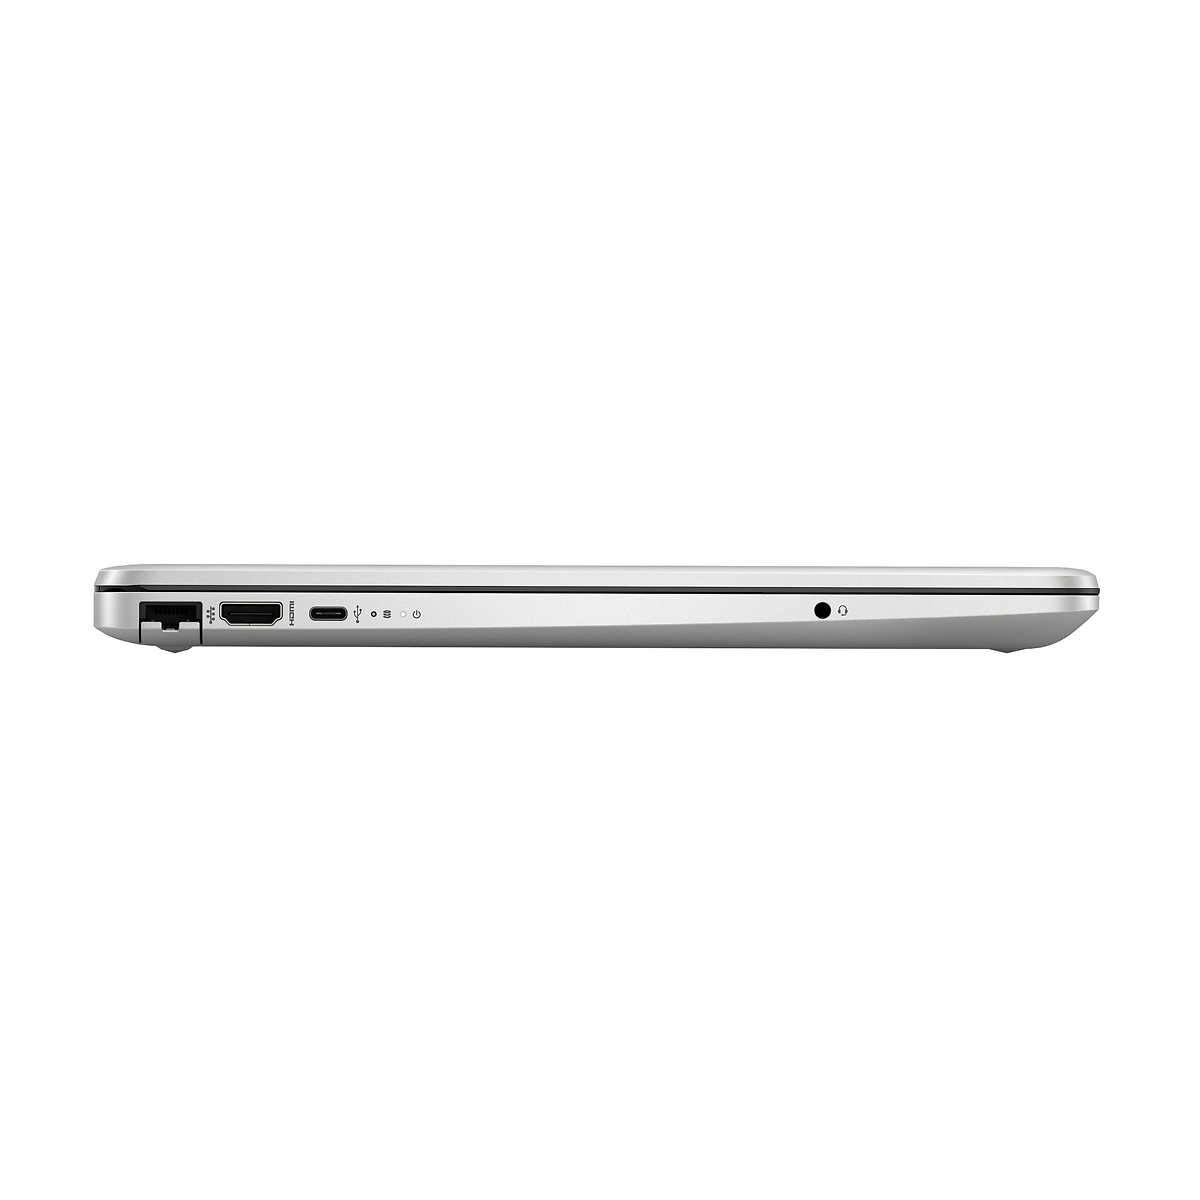 2021 HP High Performance Laptop 15.6